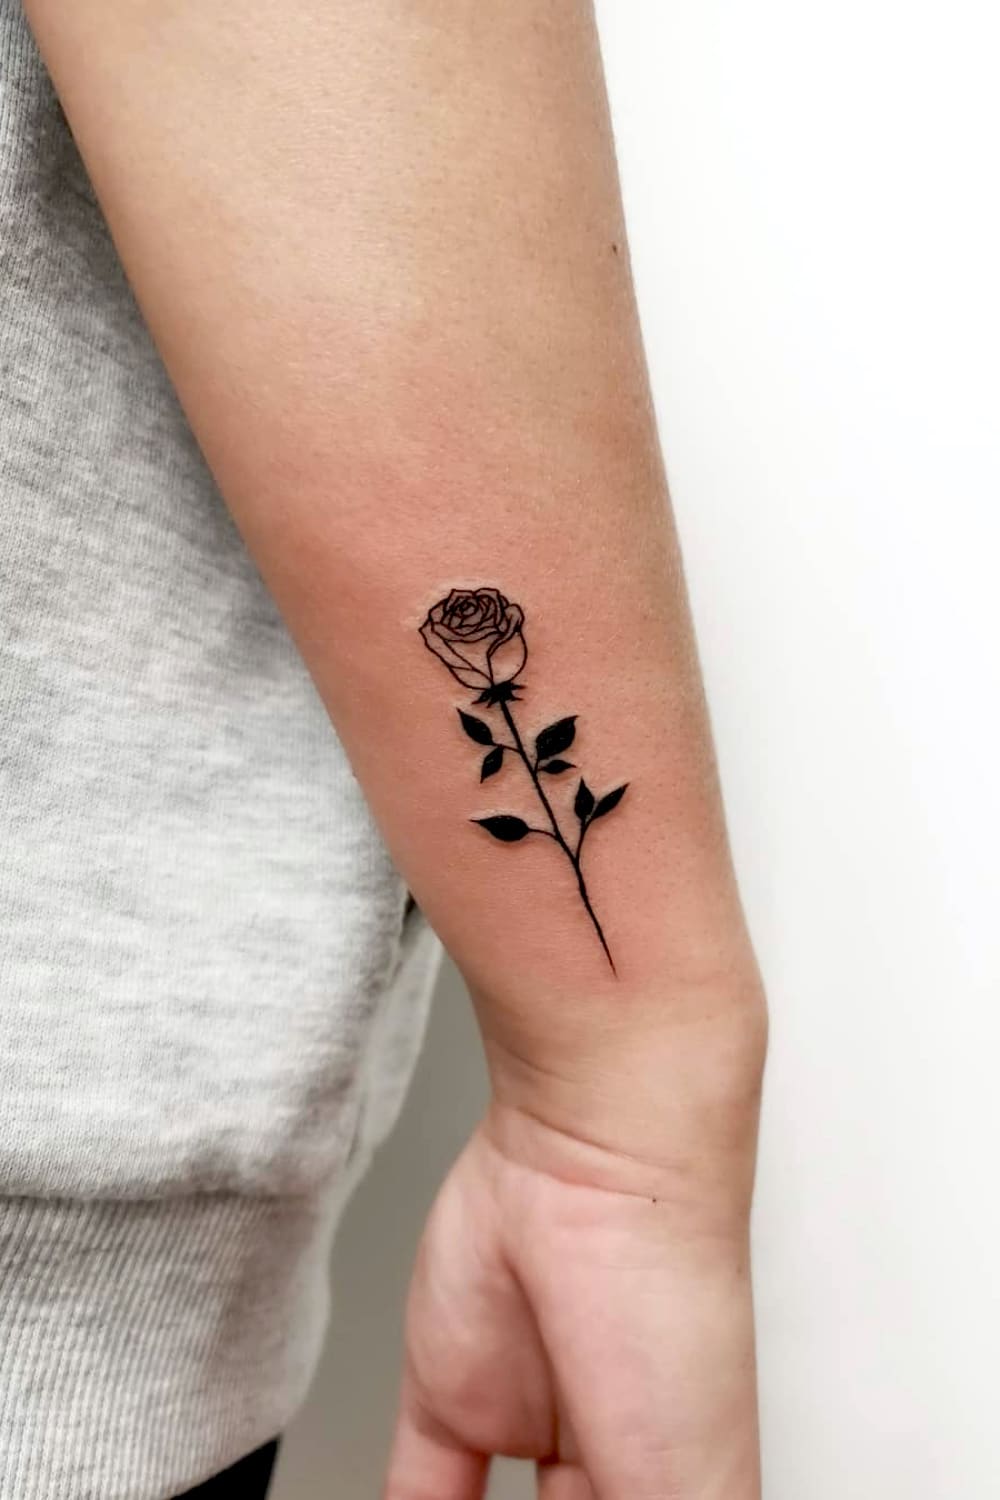 Striking small black rose tattoo